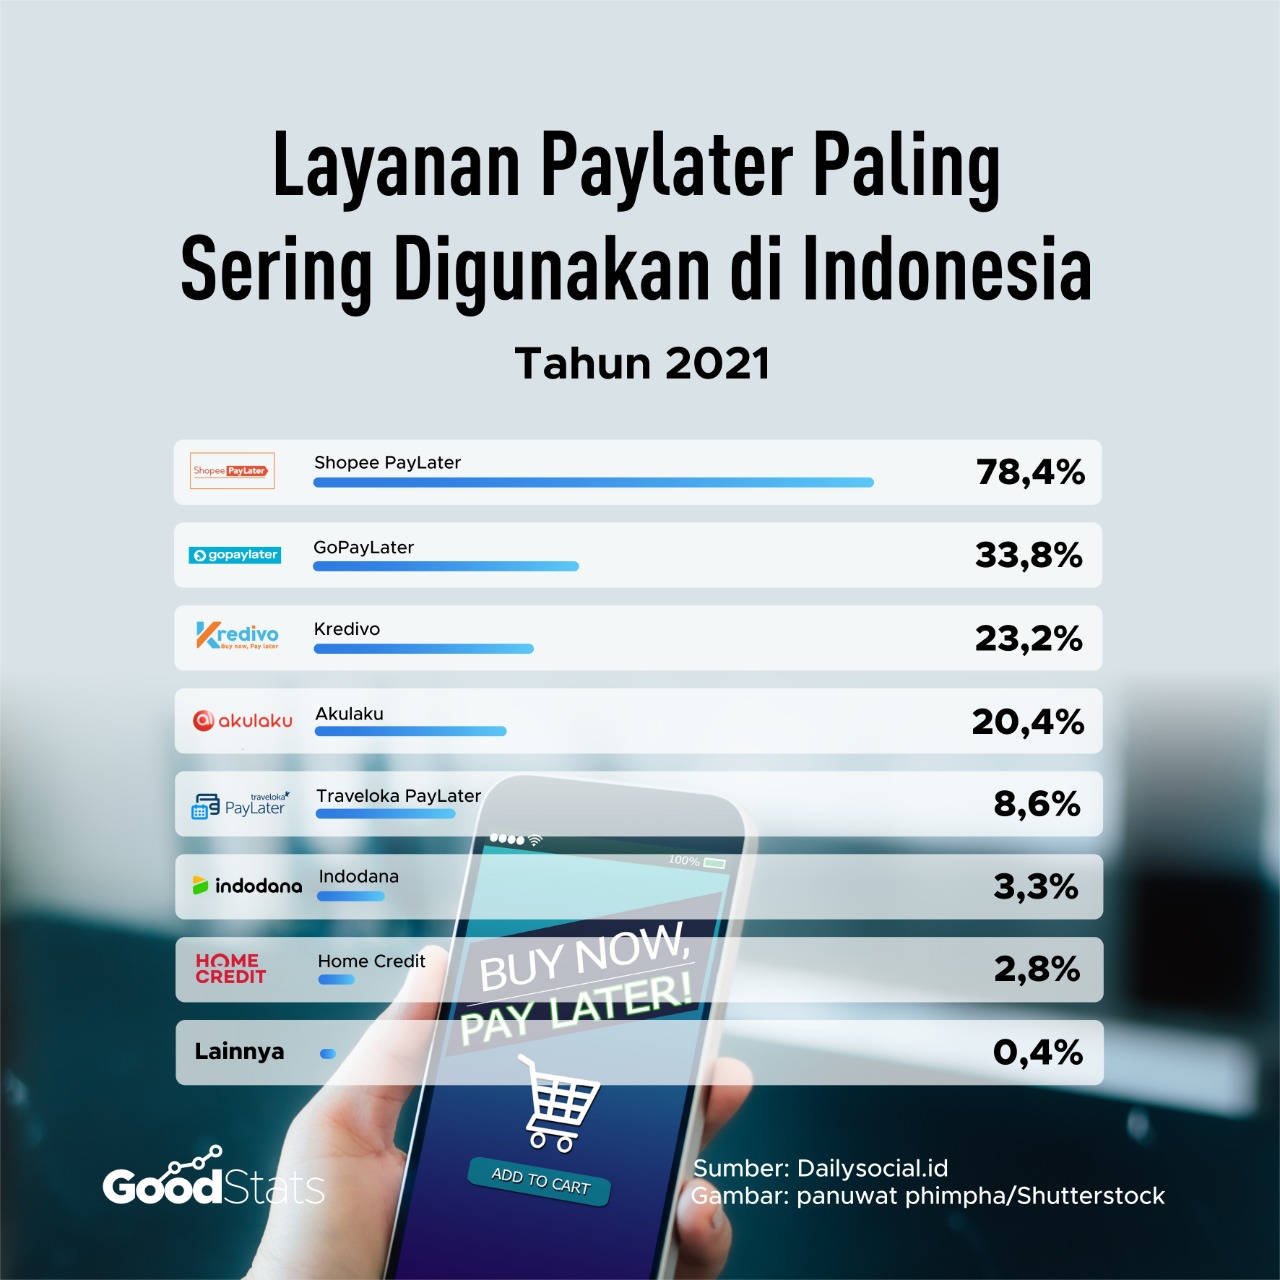 Layanan paylater paling sering digunakan di Indonesia | Siti Hanna/GoodStats